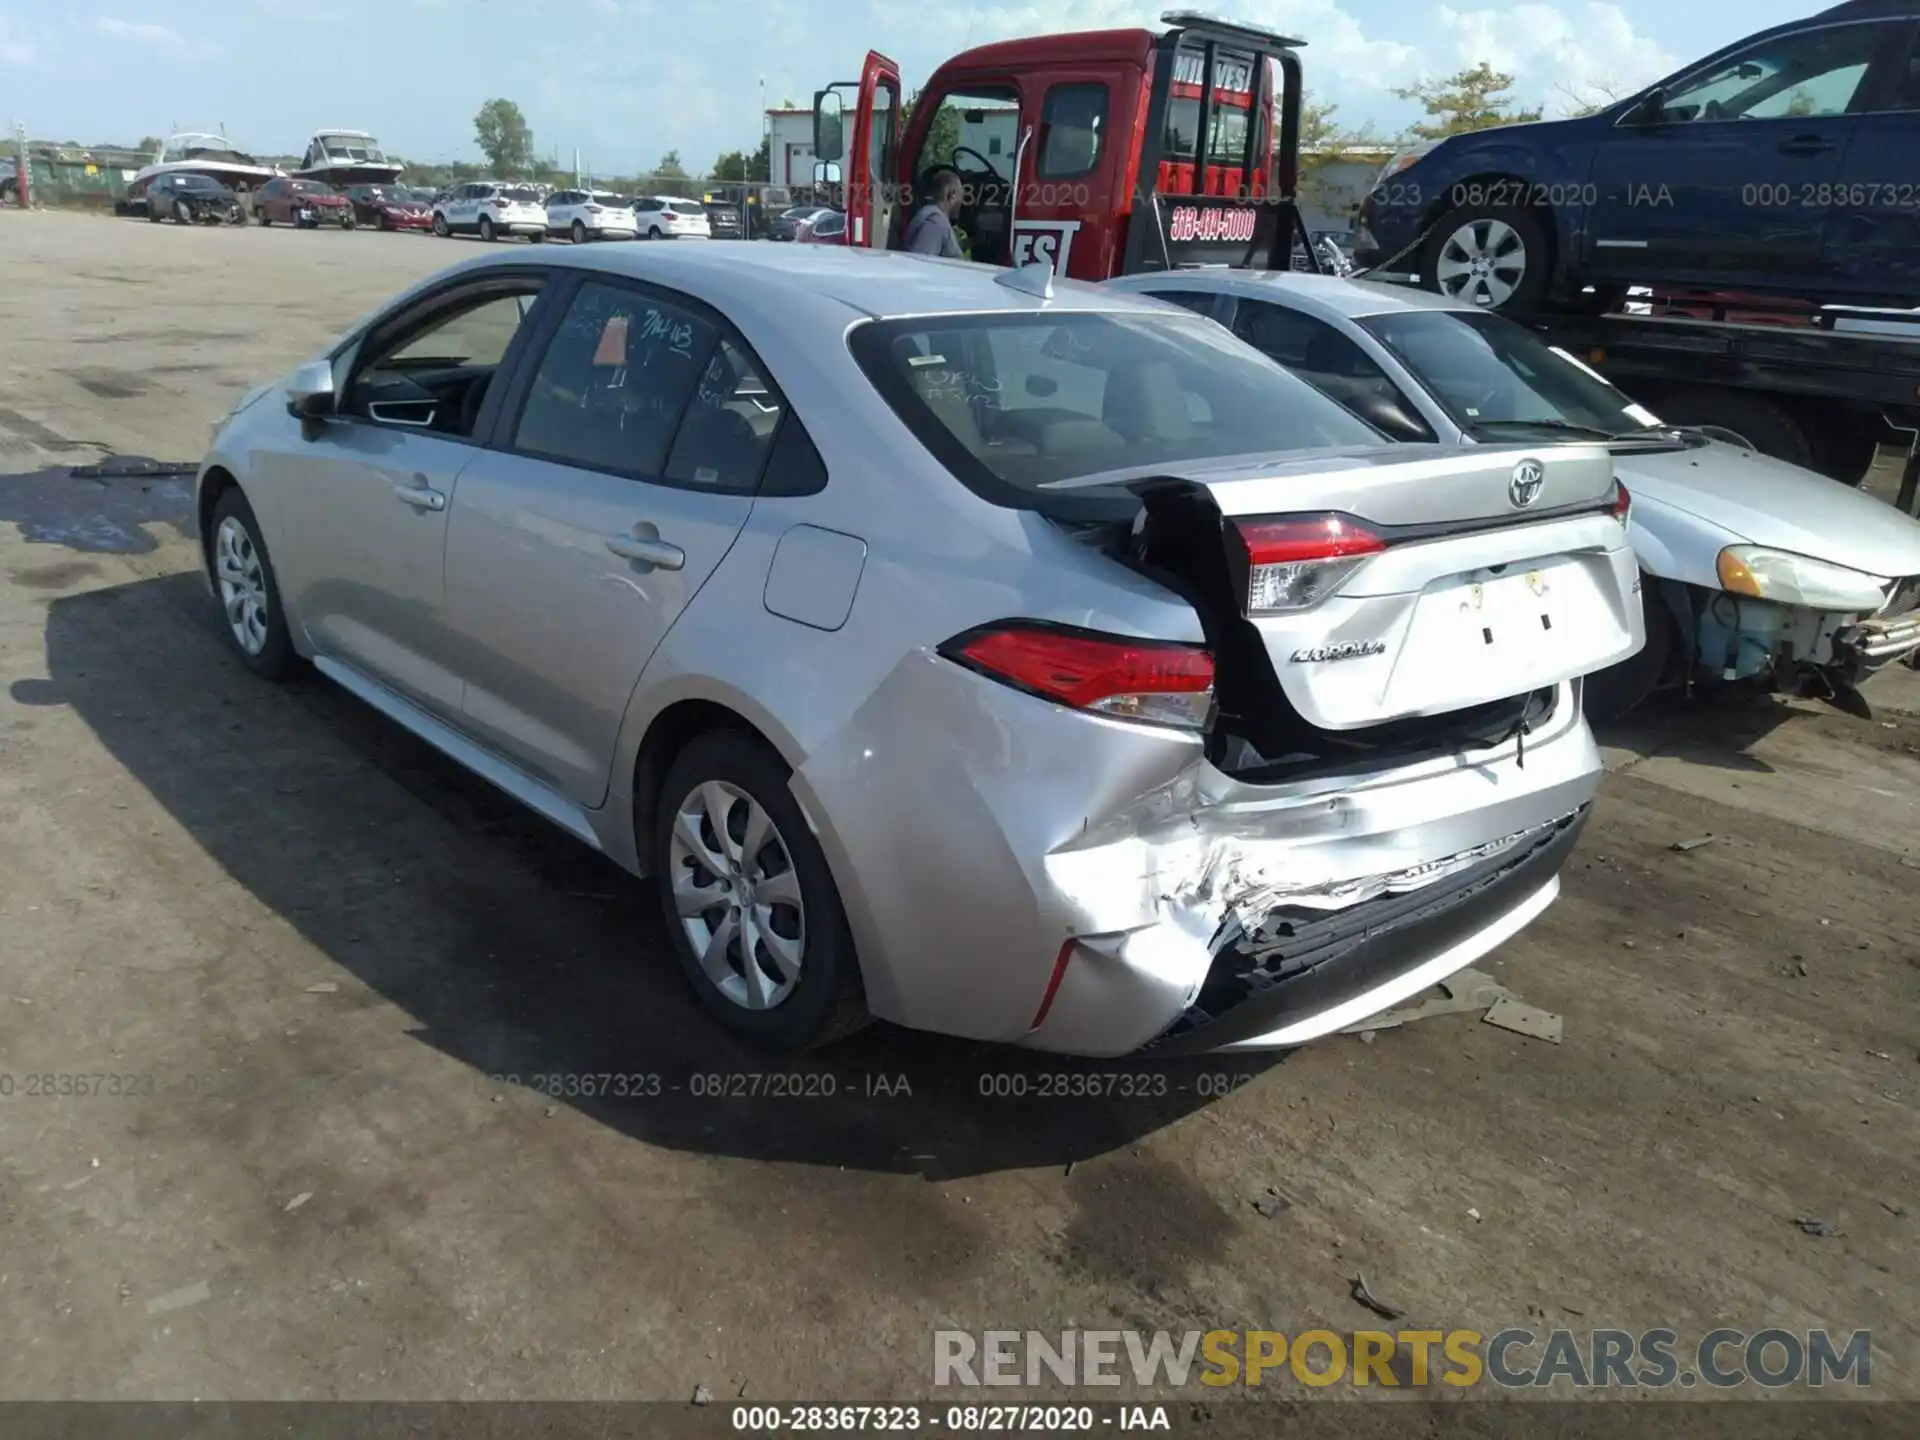 3 Photograph of a damaged car JTDEPRAE4LJ024462 TOYOTA COROLLA 2020